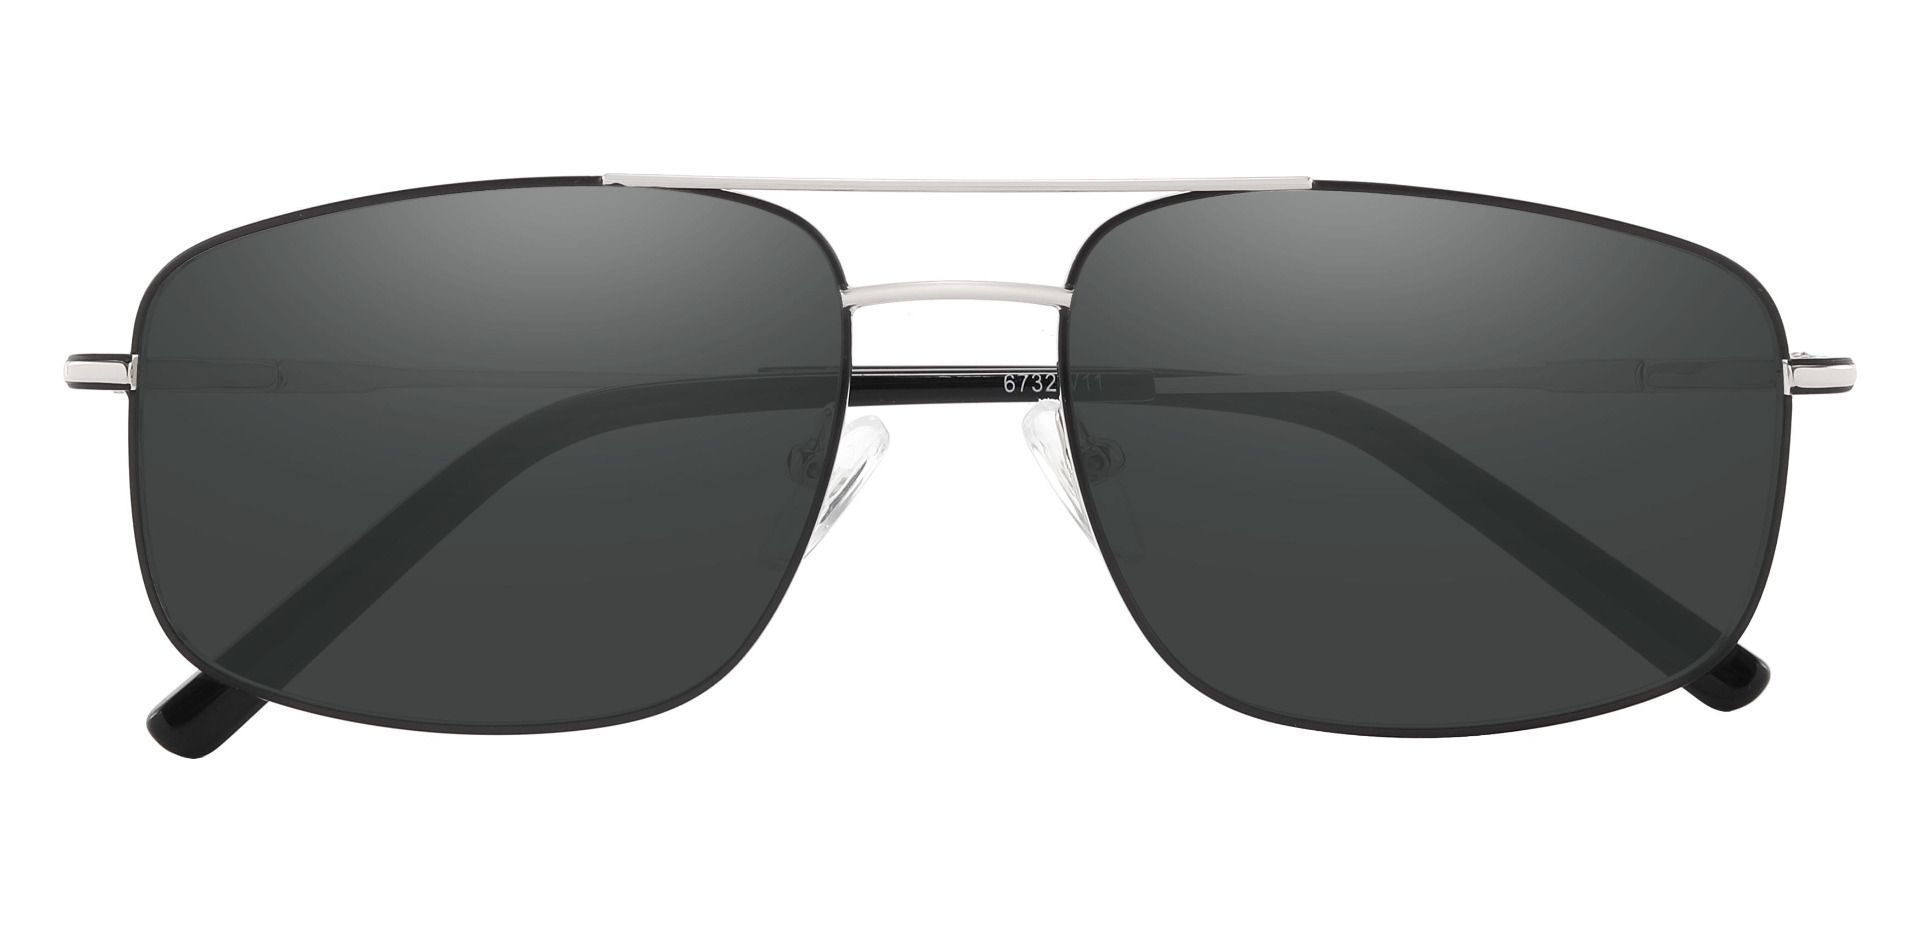 Turner Aviator Reading Sunglasses - Silver Frame With Gray Lenses